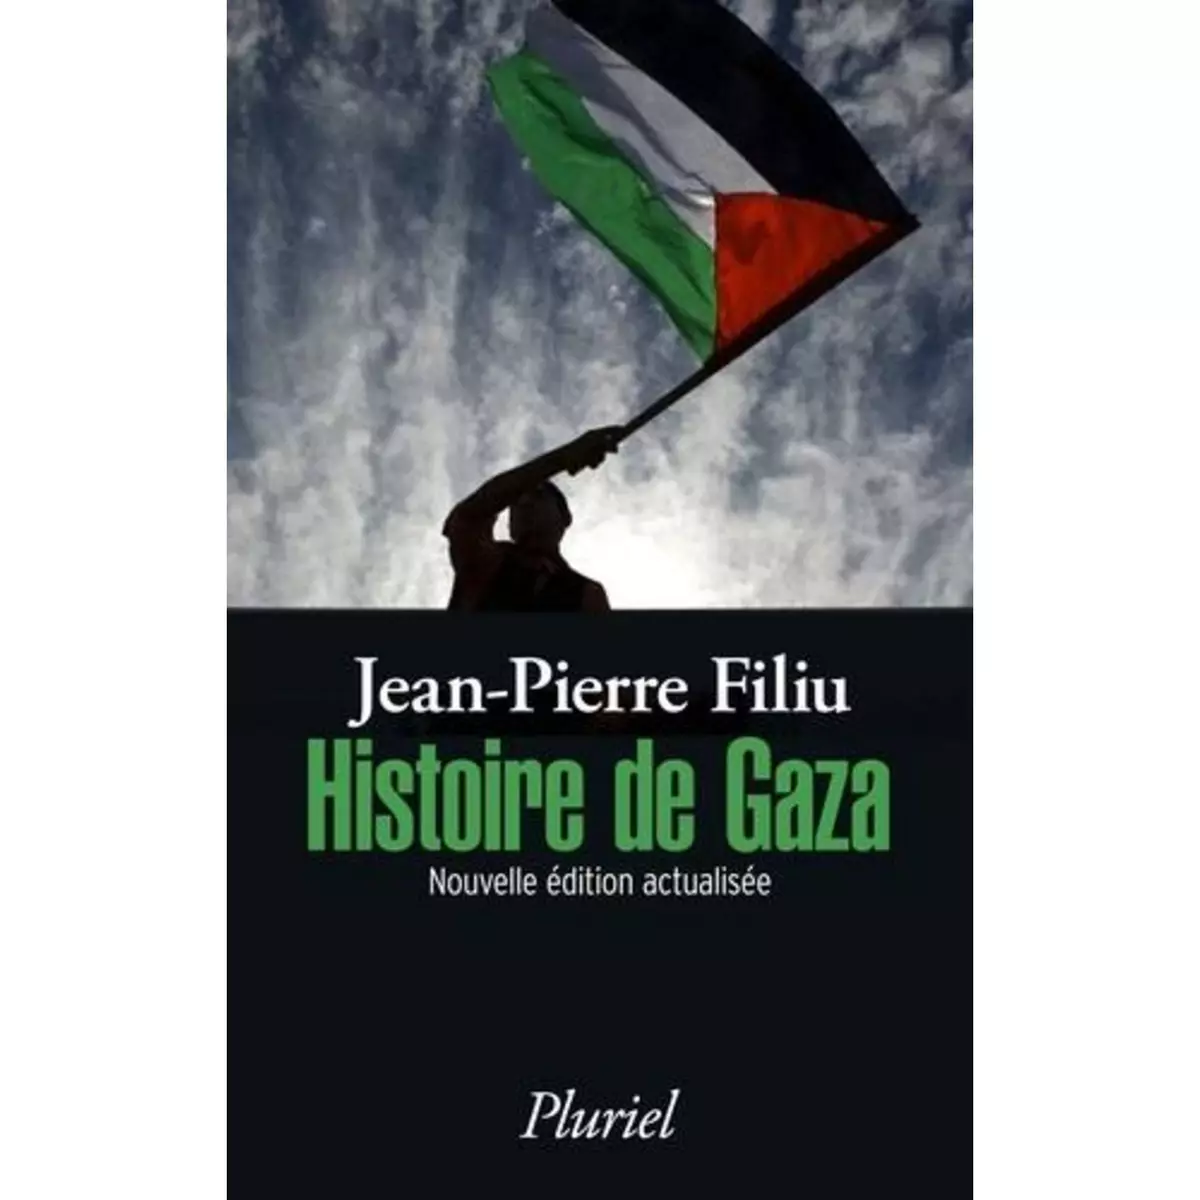  HISTOIRE DE GAZA, Filiu Jean-Pierre